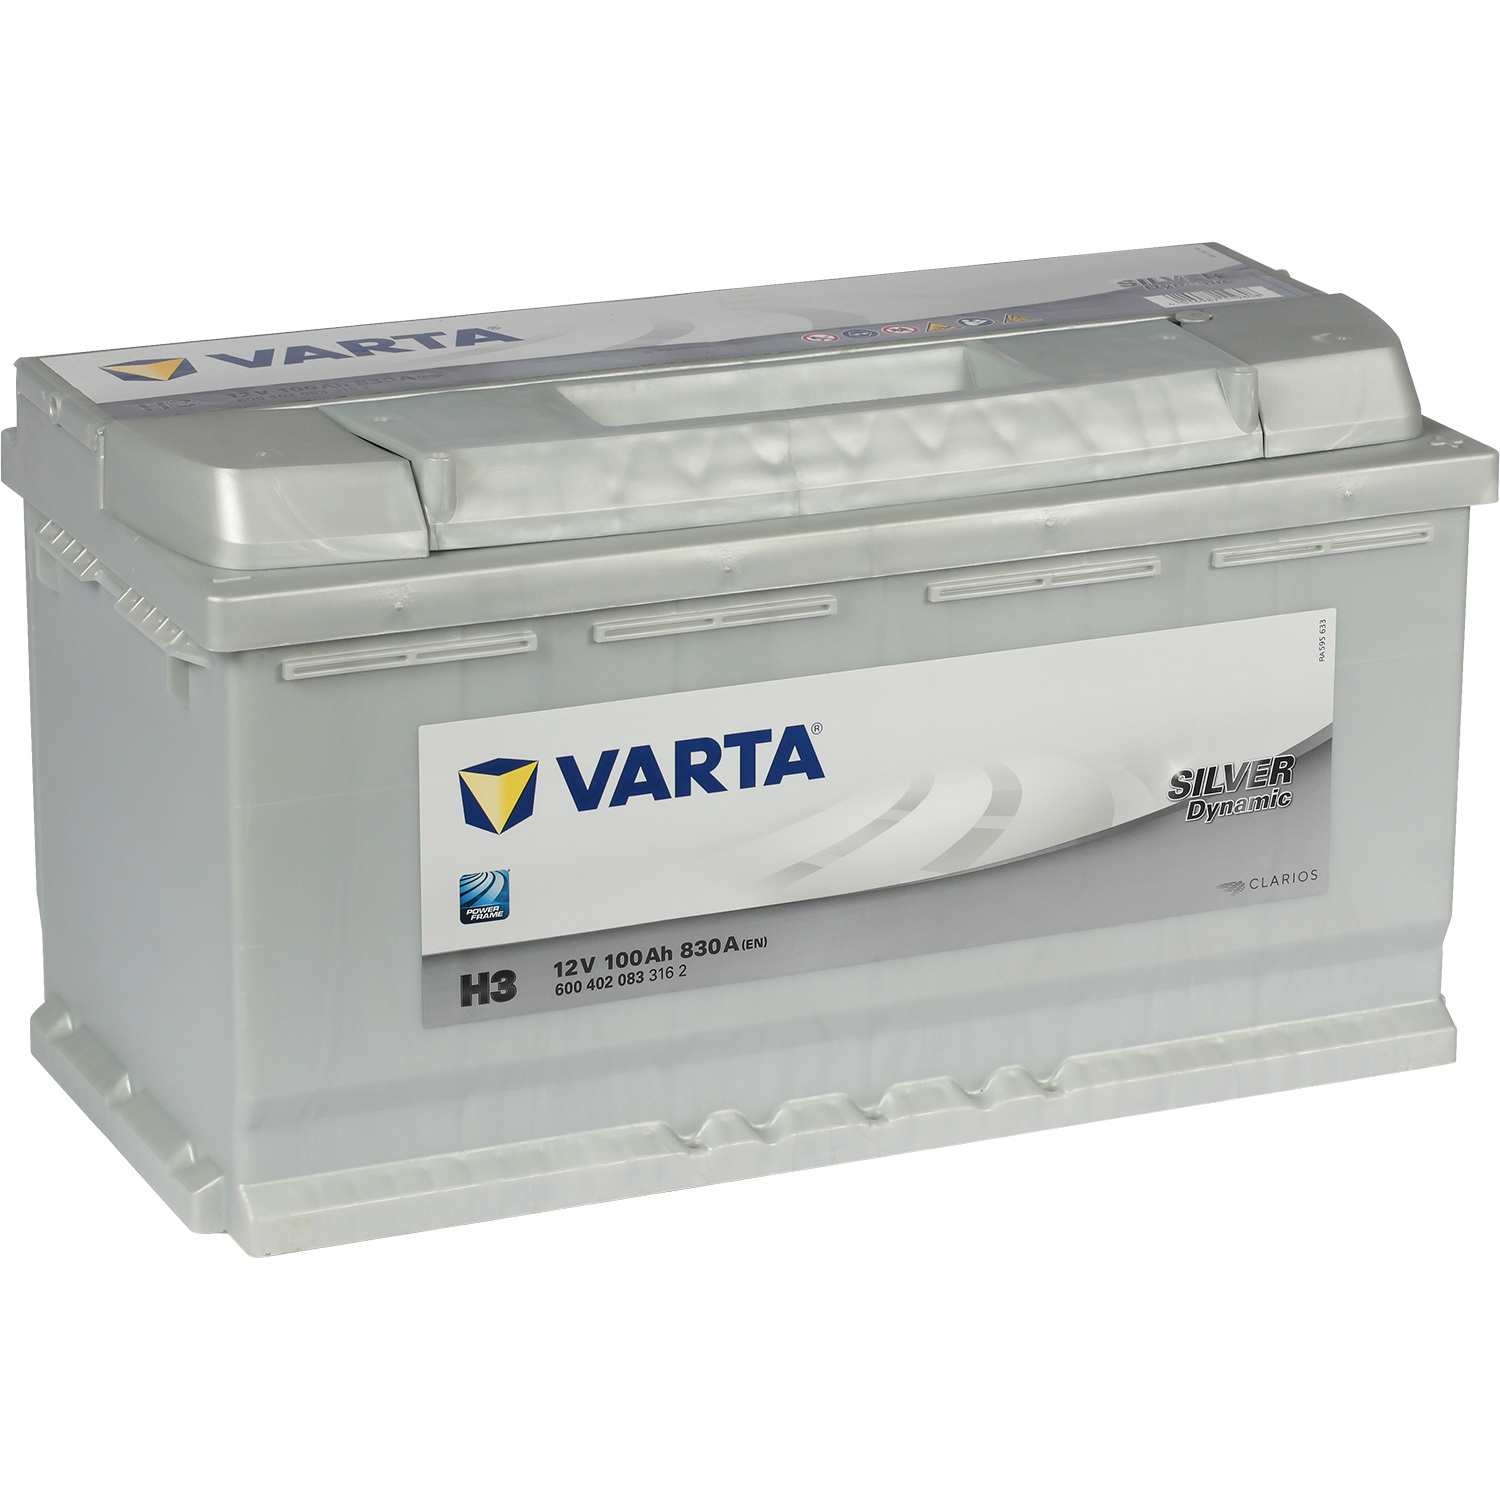 Varta Автомобильный аккумулятор Varta Silver Dynamic H3 100 Ач обратная полярность L5 varta автомобильный аккумулятор varta 105 ач обратная полярность l6